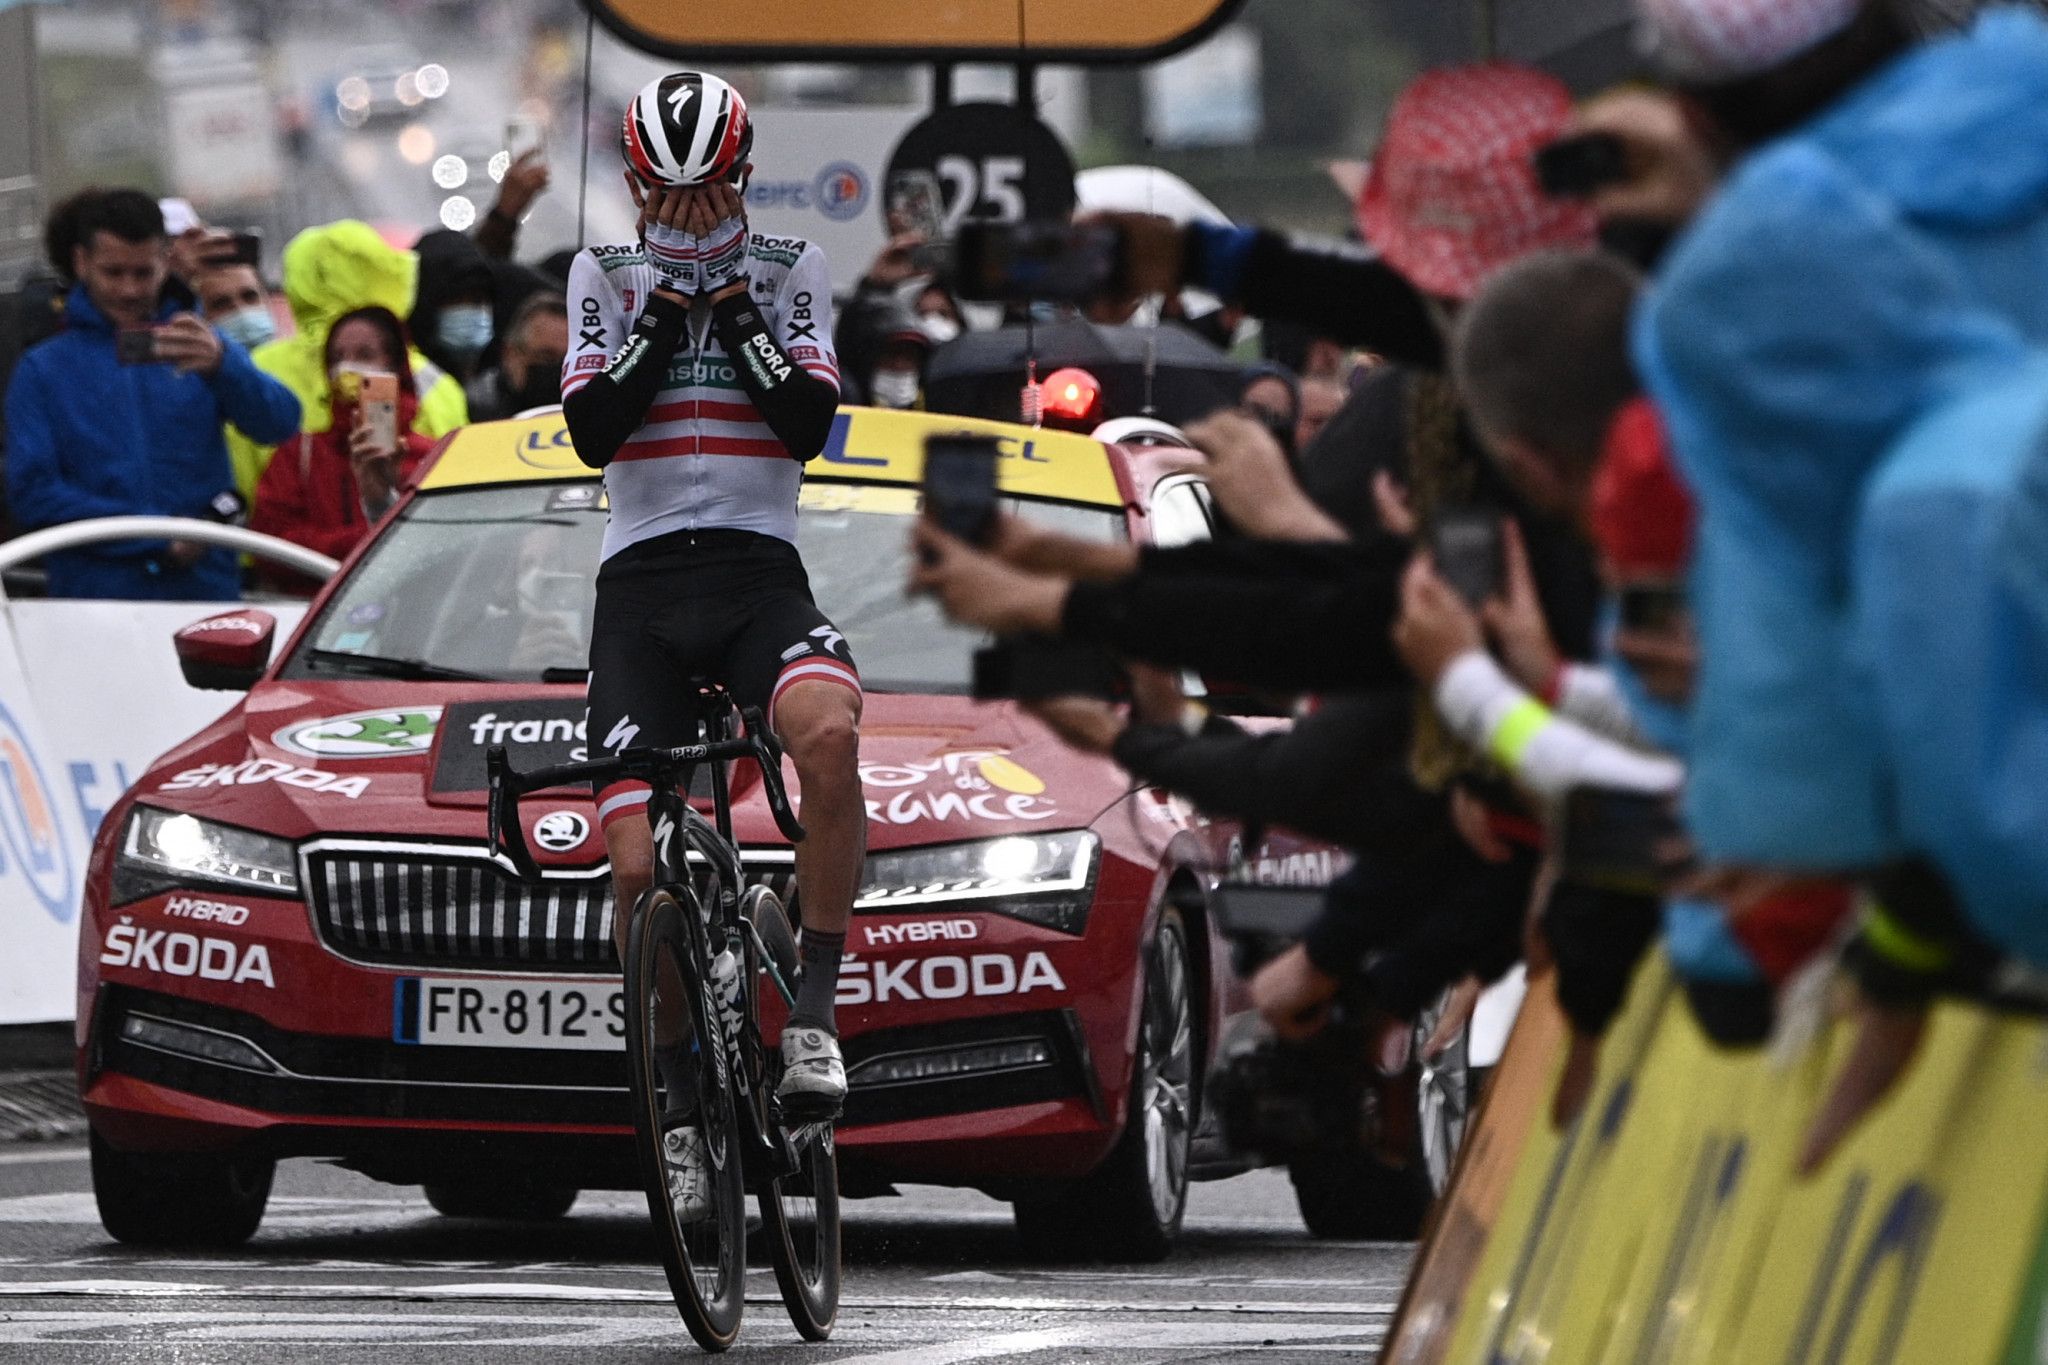 Patrick Konrad won the 16th stage of the 2021 Tour de France ©Getty Images